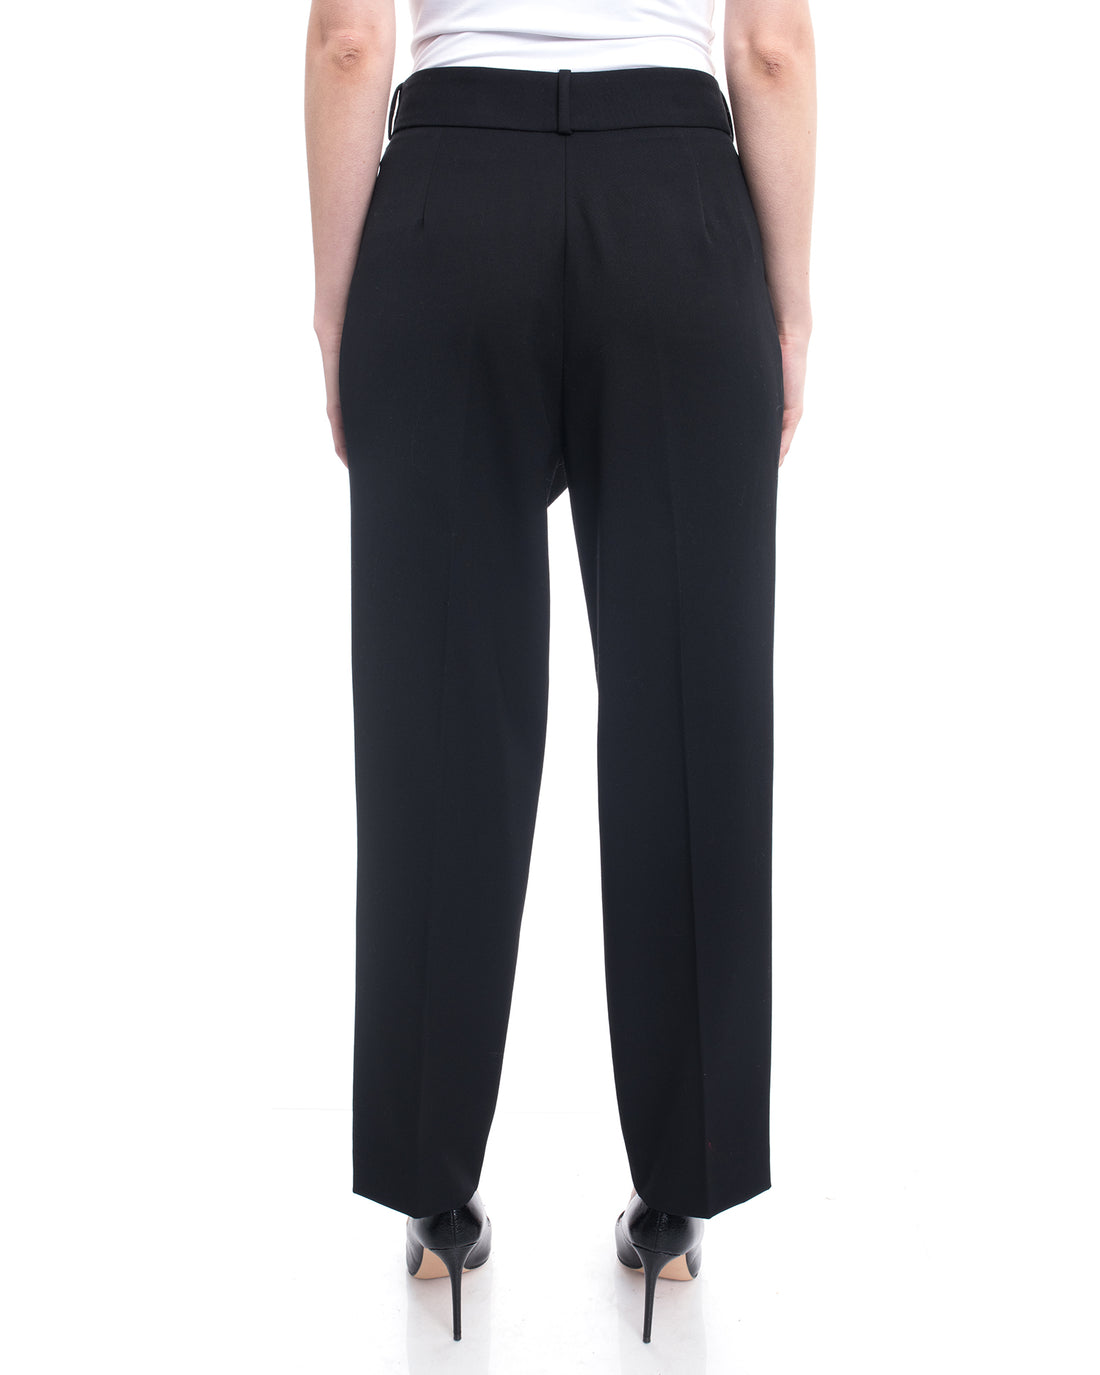 Lanvin Black Dress Trouser with Sash Belt - 6